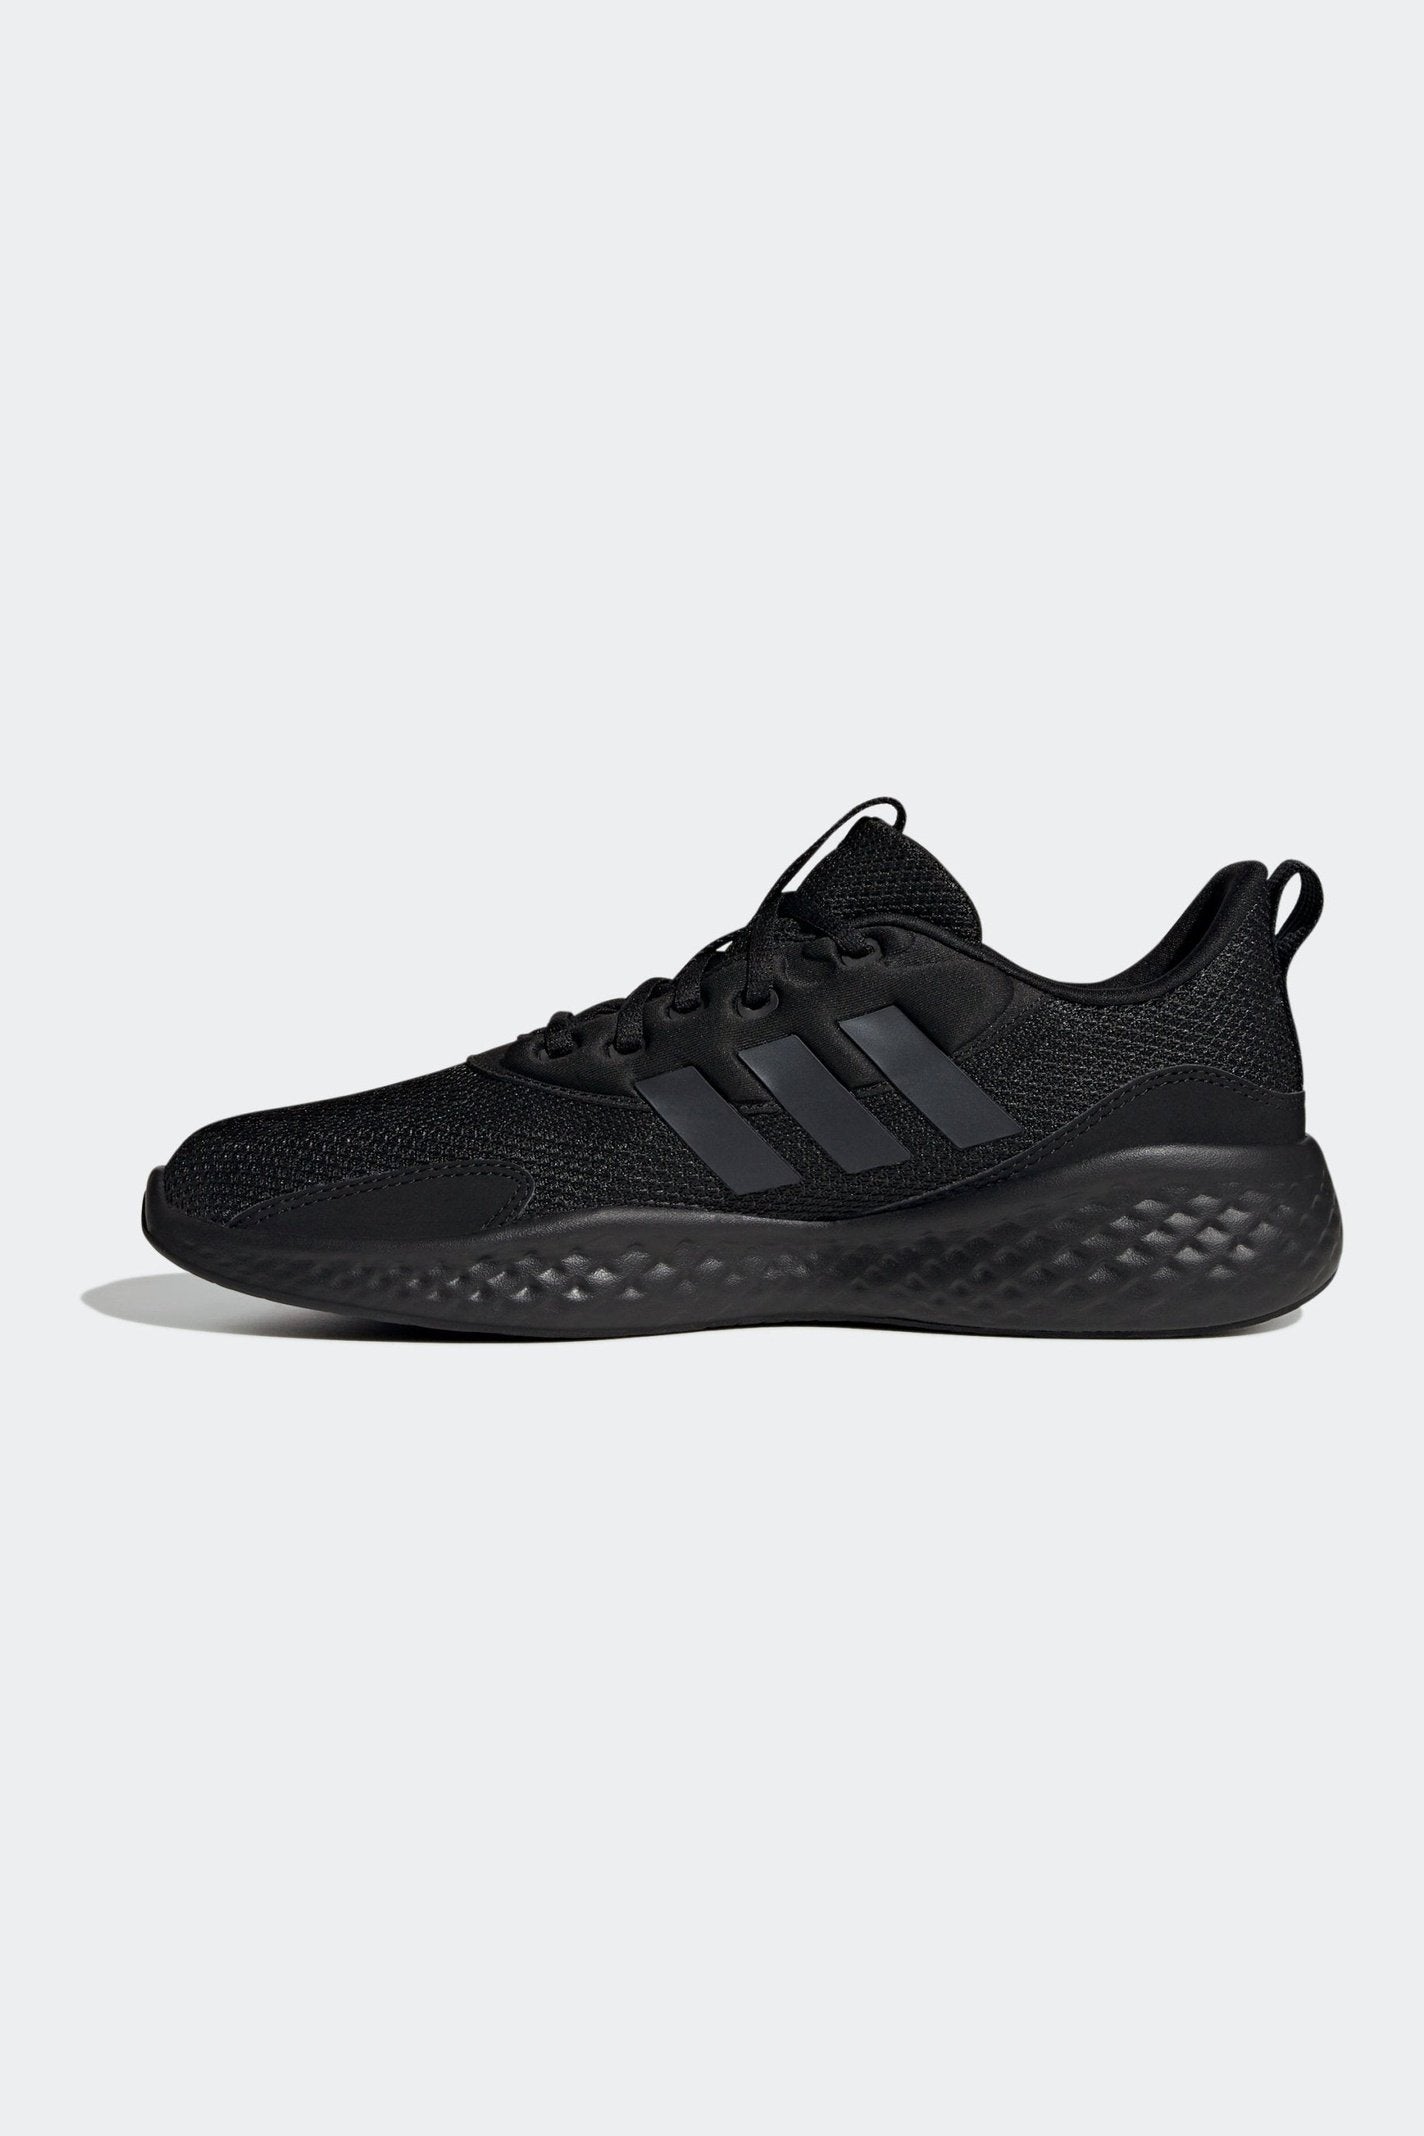 ADIDAS - נעלי ספורט לגברים FLUIDFLOW 3.0 בצבע שחור - MASHBIR//365